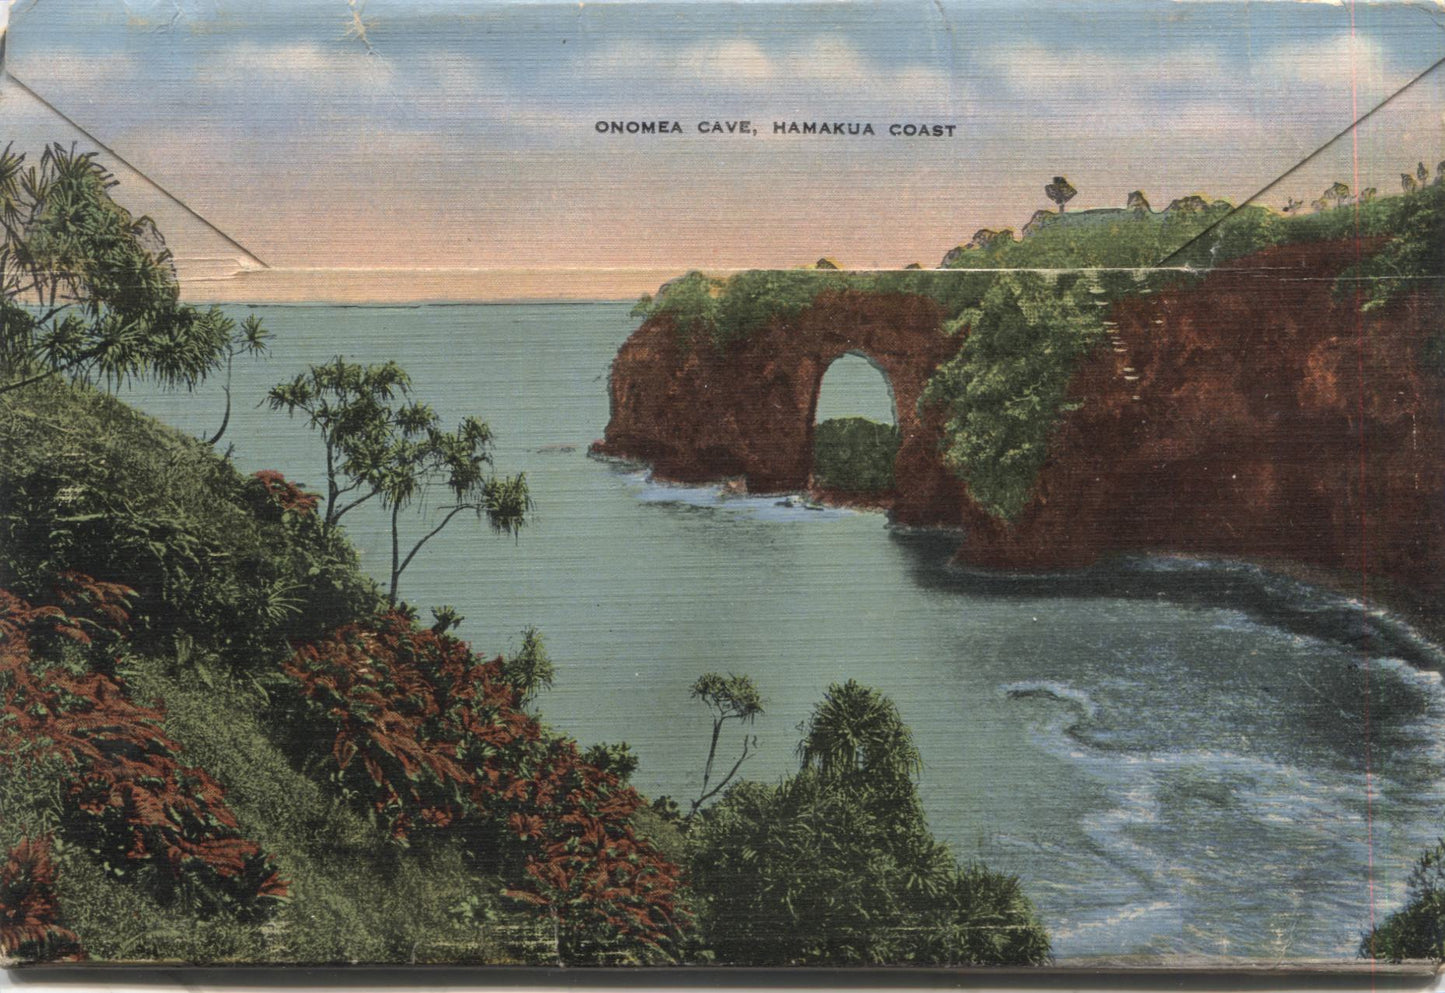 Hawaiian Islands Vintage Souvenir Postcard Folder